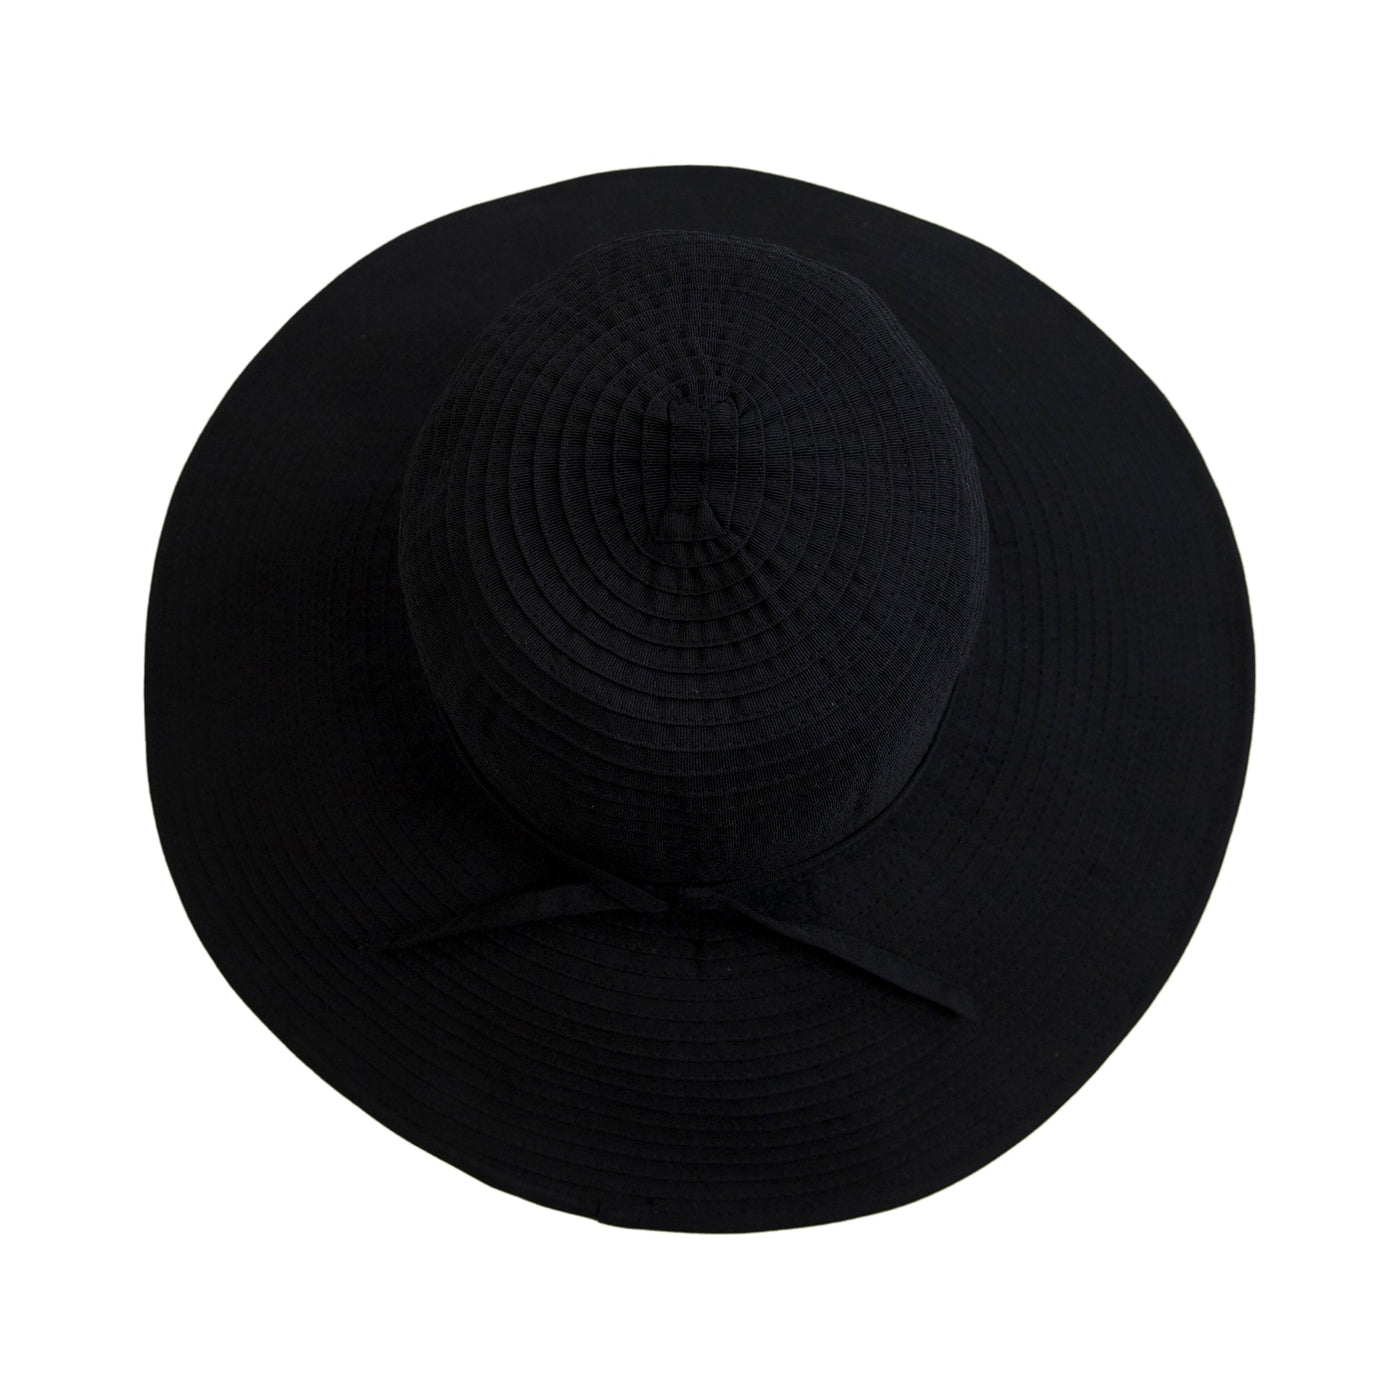 RIBBON - Women's Ribbon Braid Large Brim Hat